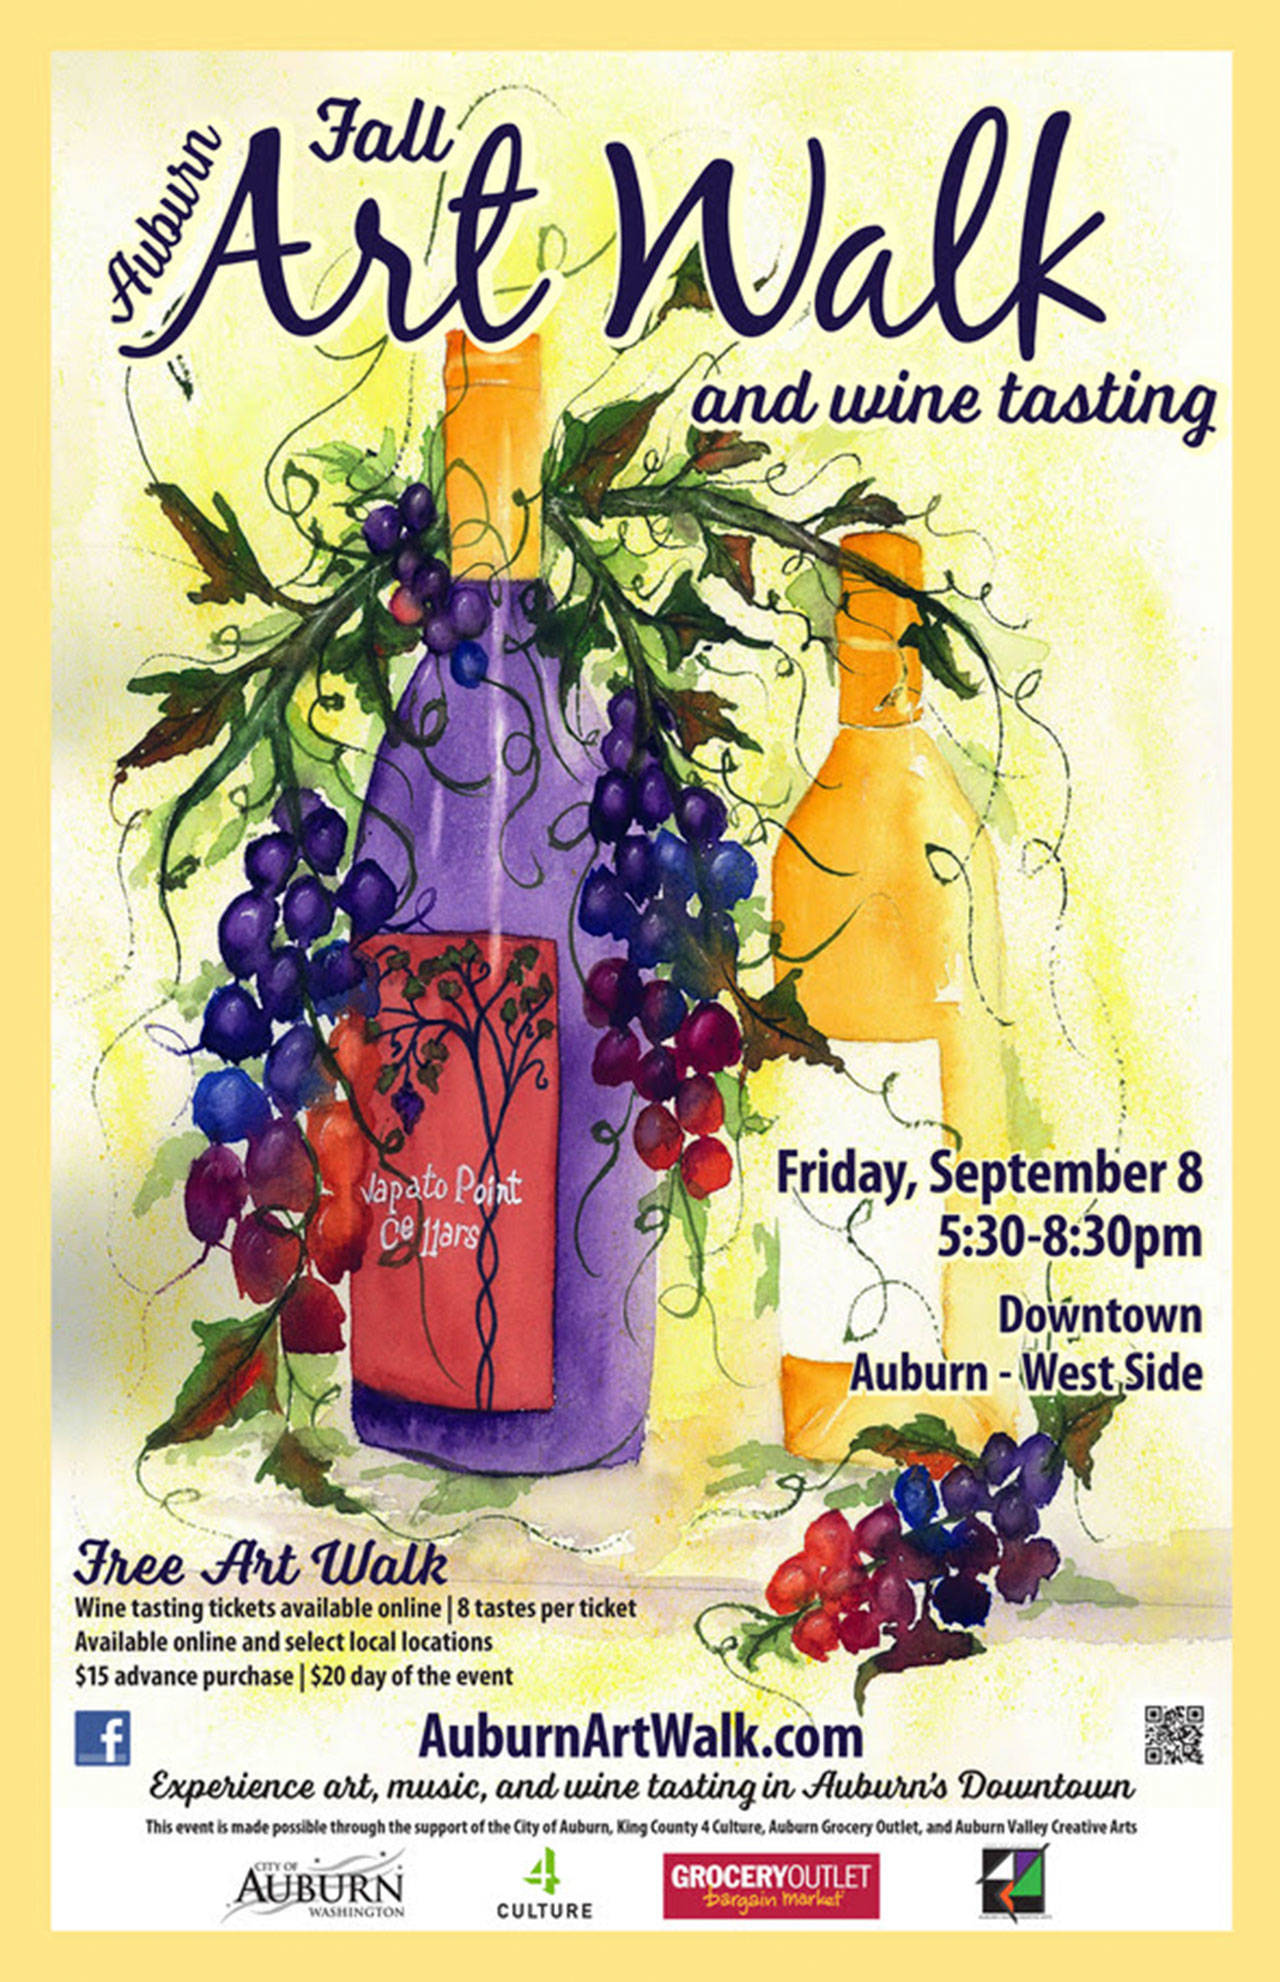 Auburn Artwalk and Wine Tasting event returns Friday